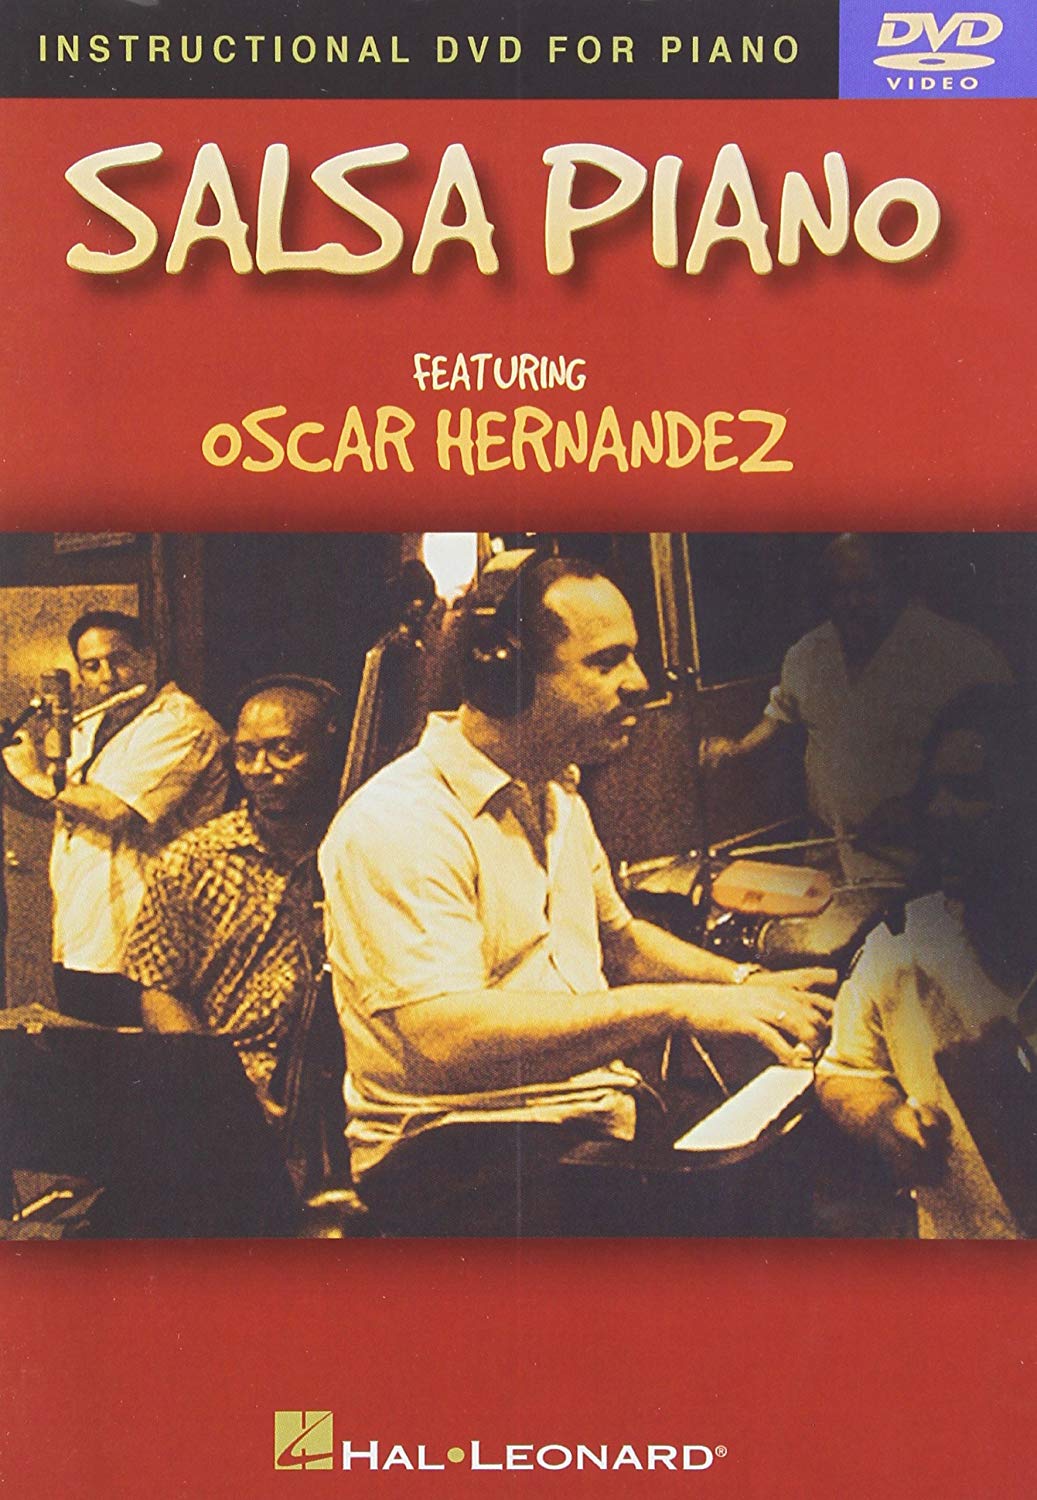 OSCAR HERNANDEZ - Salsa Piano cover 